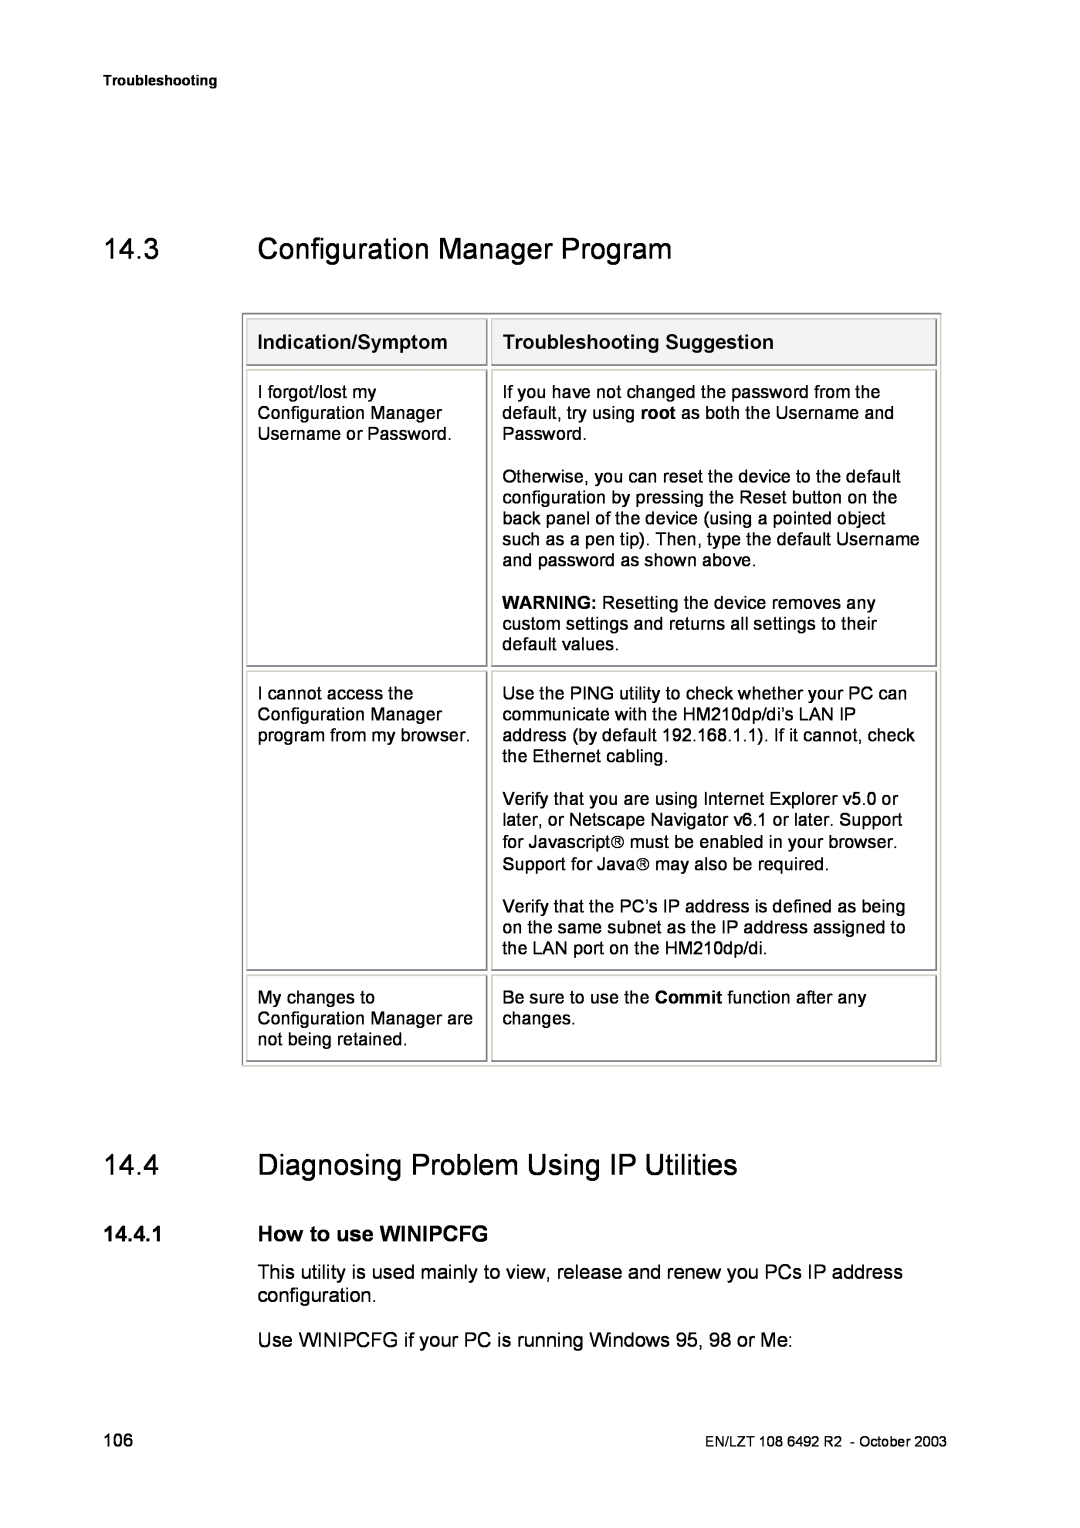 Garmin HM210DP/DI manual Configuration Manager Program, Diagnosing Problem Using IP Utilities, How to use WINIPCFG 